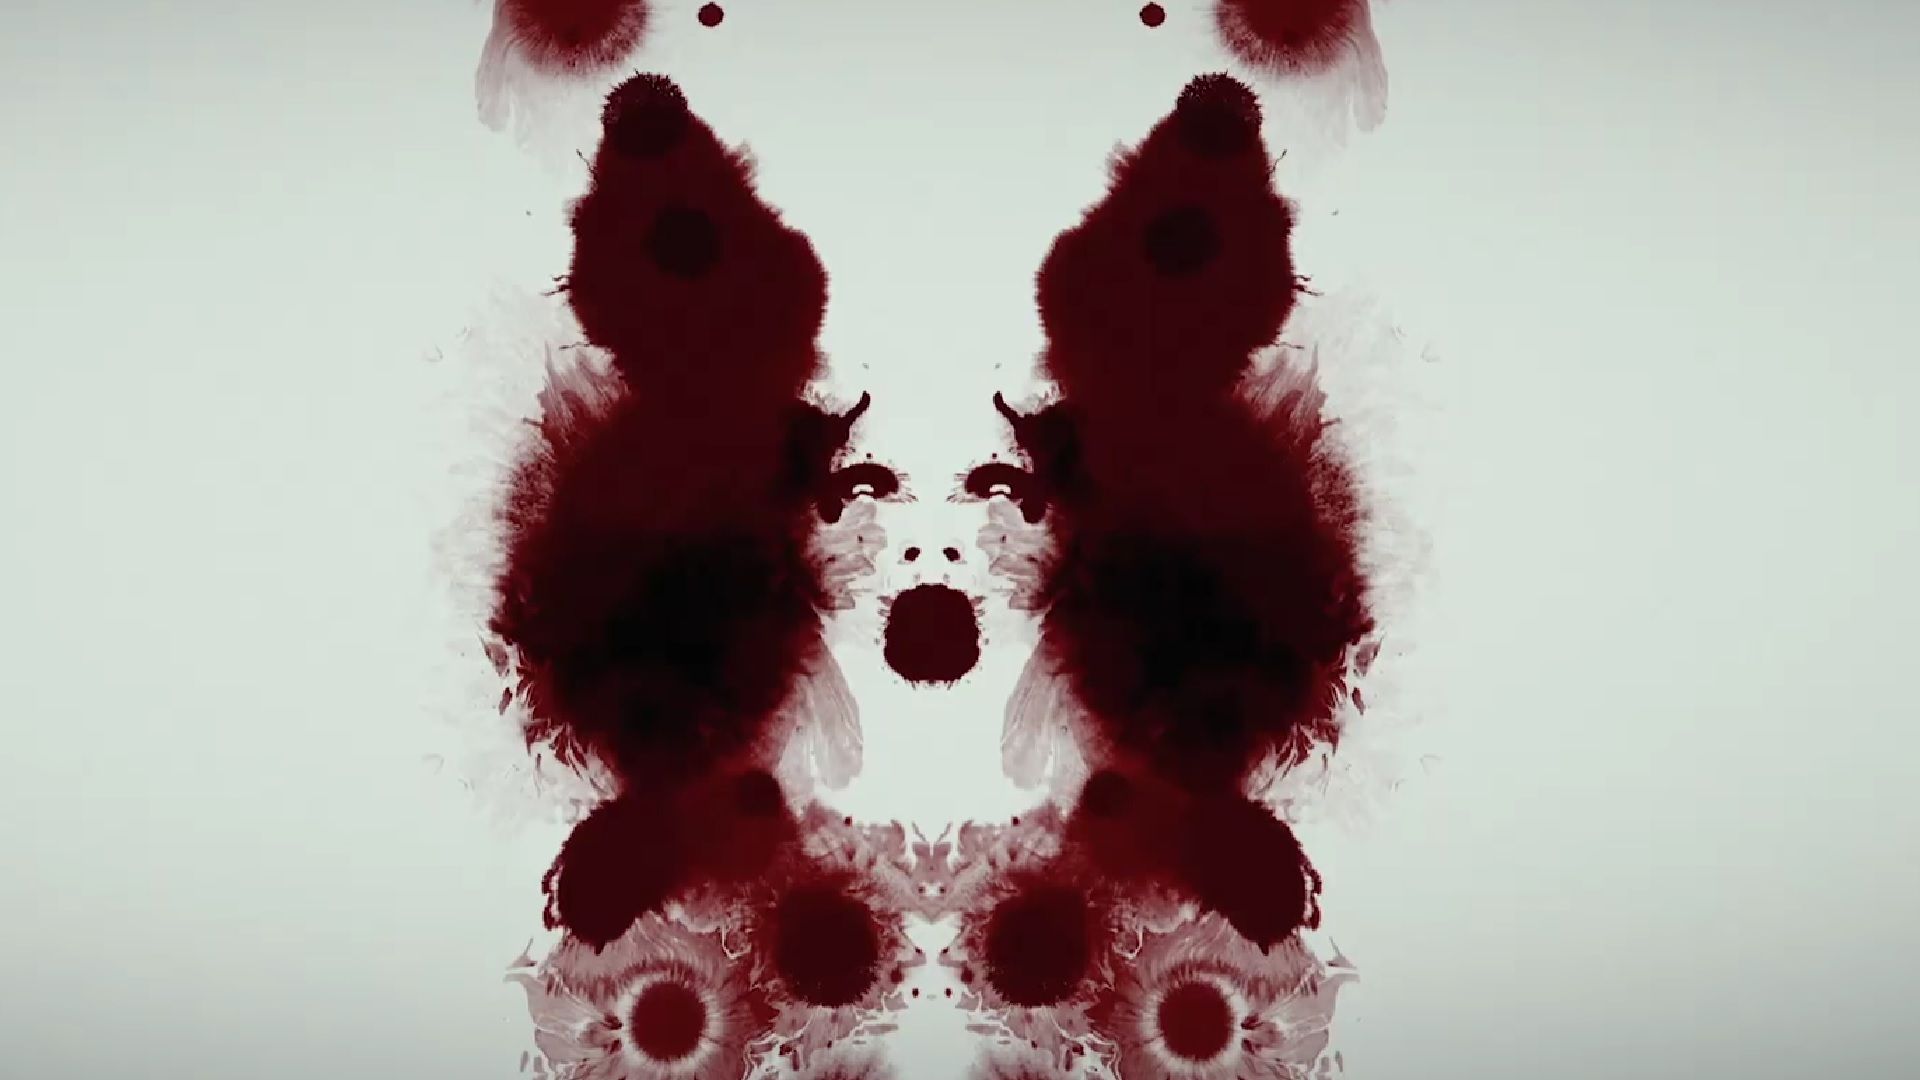 David Fincher's Serial Killer Series MINDHUNTER Gets a Teaser